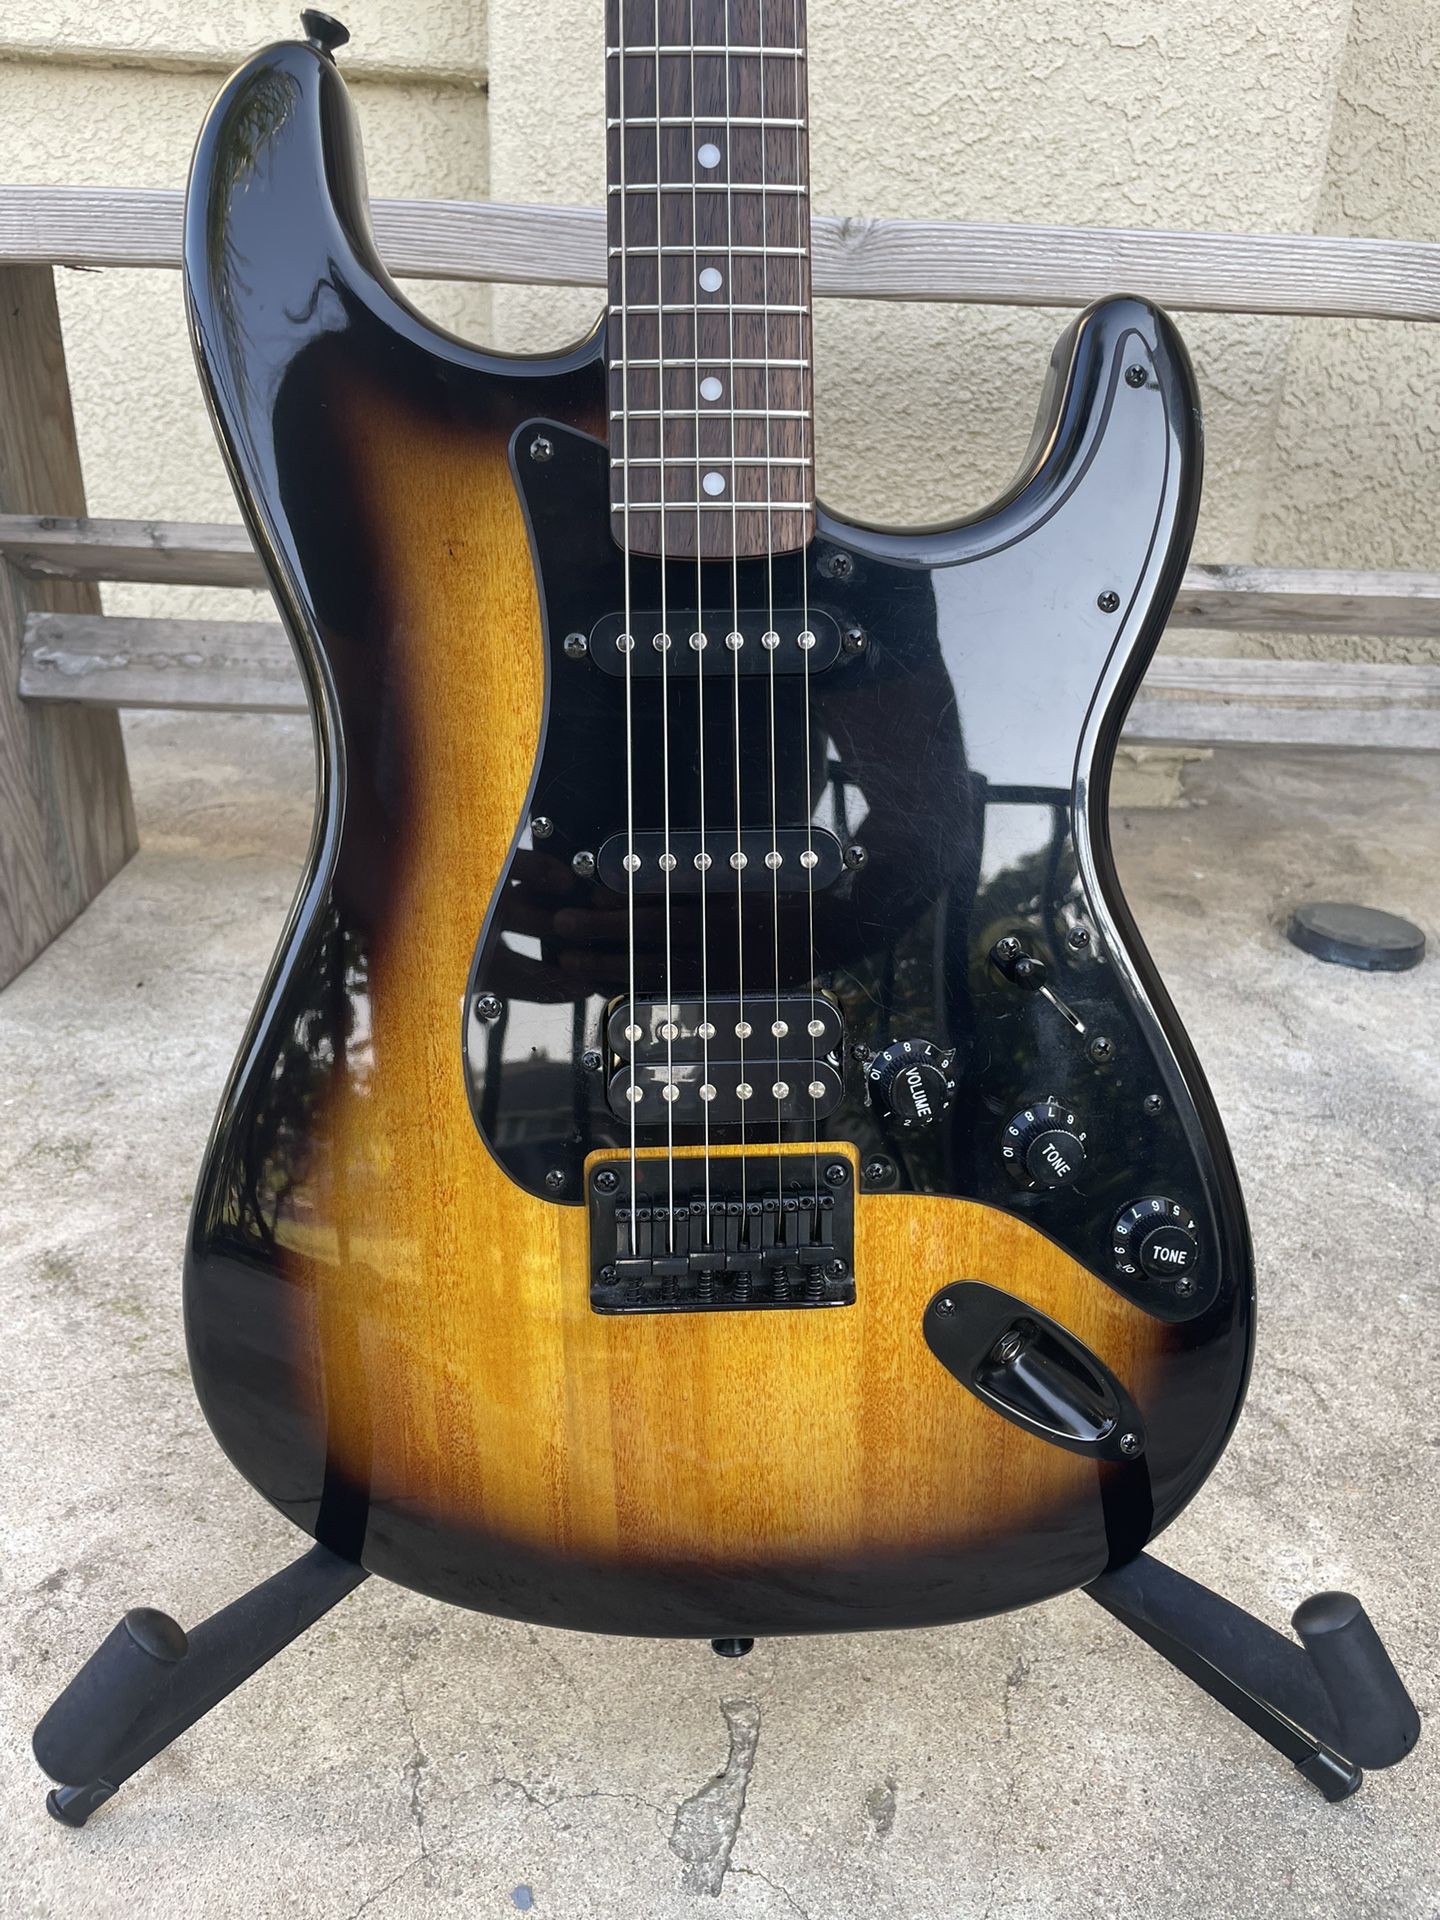 Like New Fender Squier Stratocaster Guitar For Sale